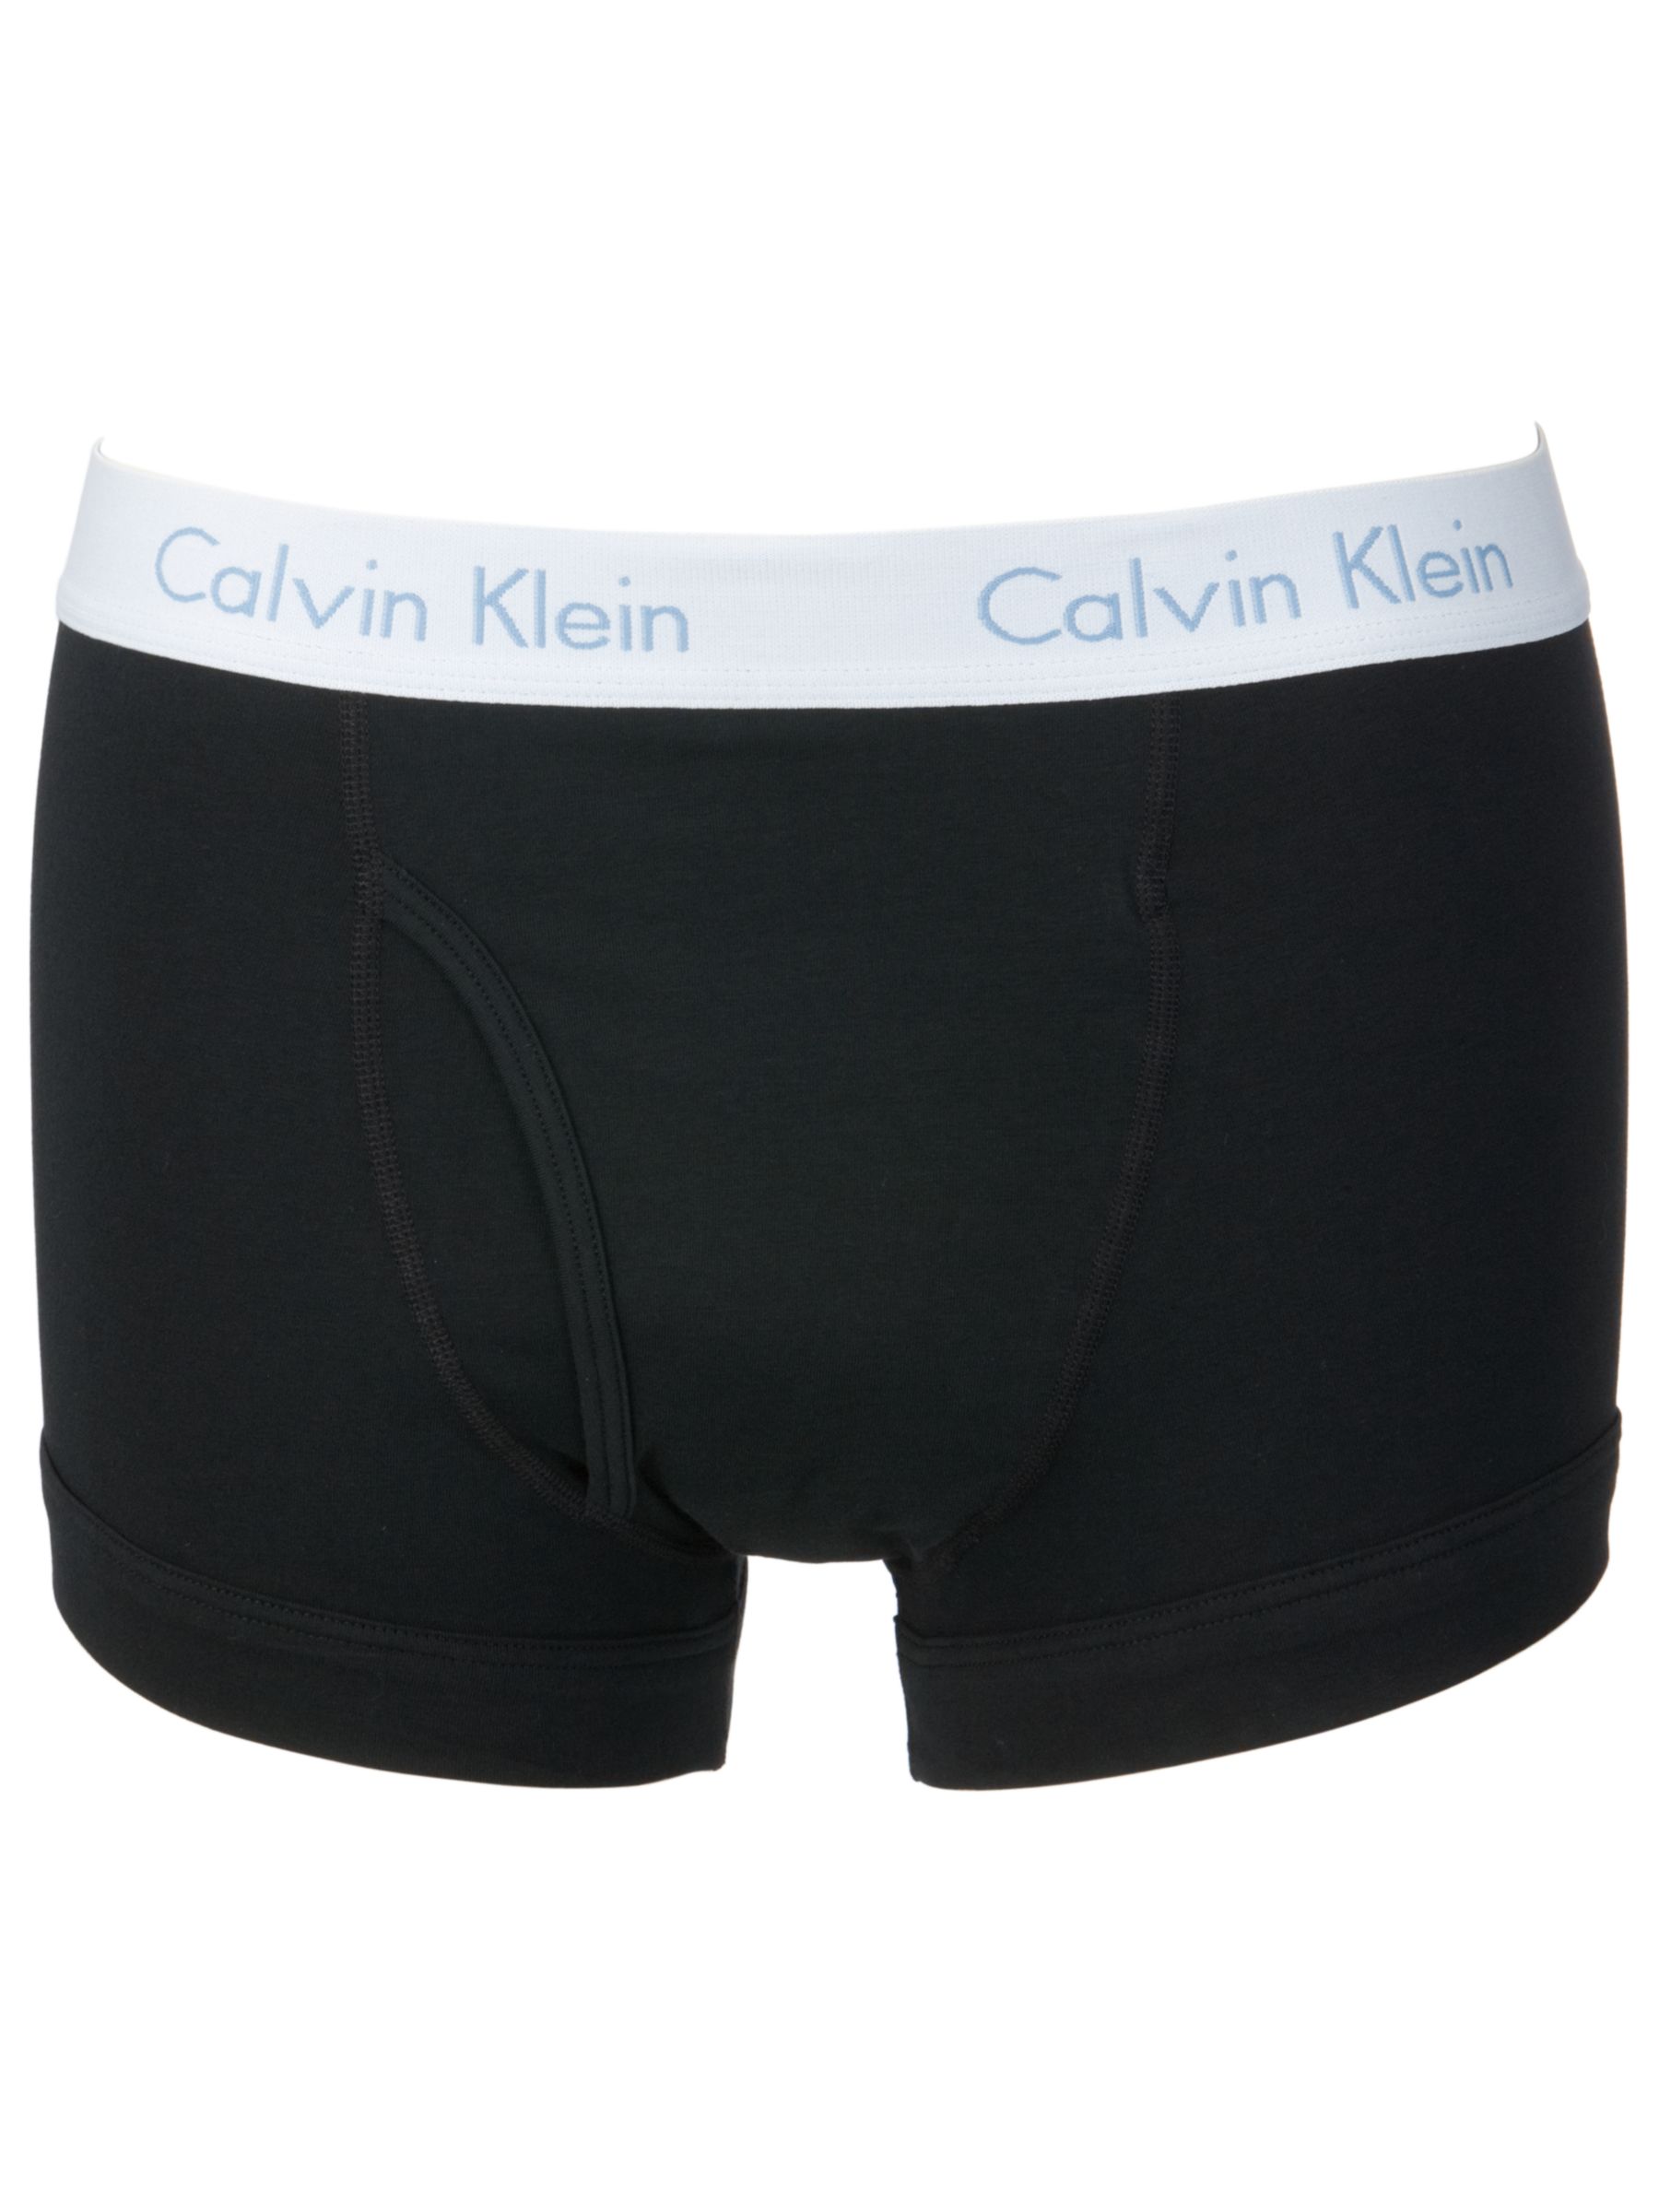 Calvin Klein Flexible Fit Trunks, Black, Small